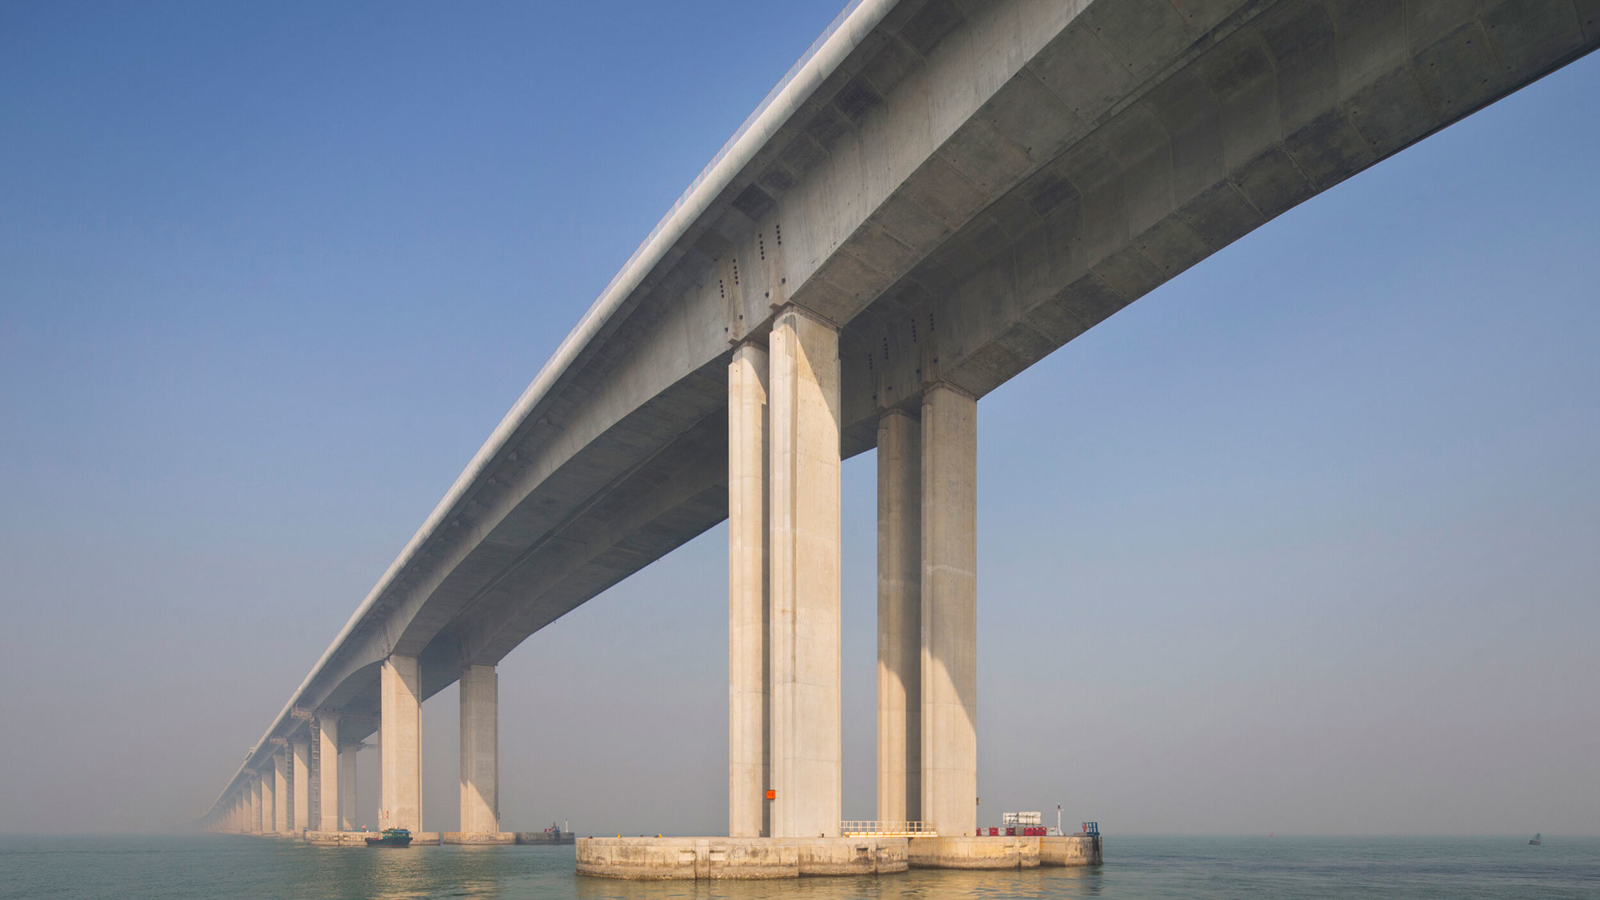 Long span viaducts on the Hong Kong Zhuhai Bridge link road